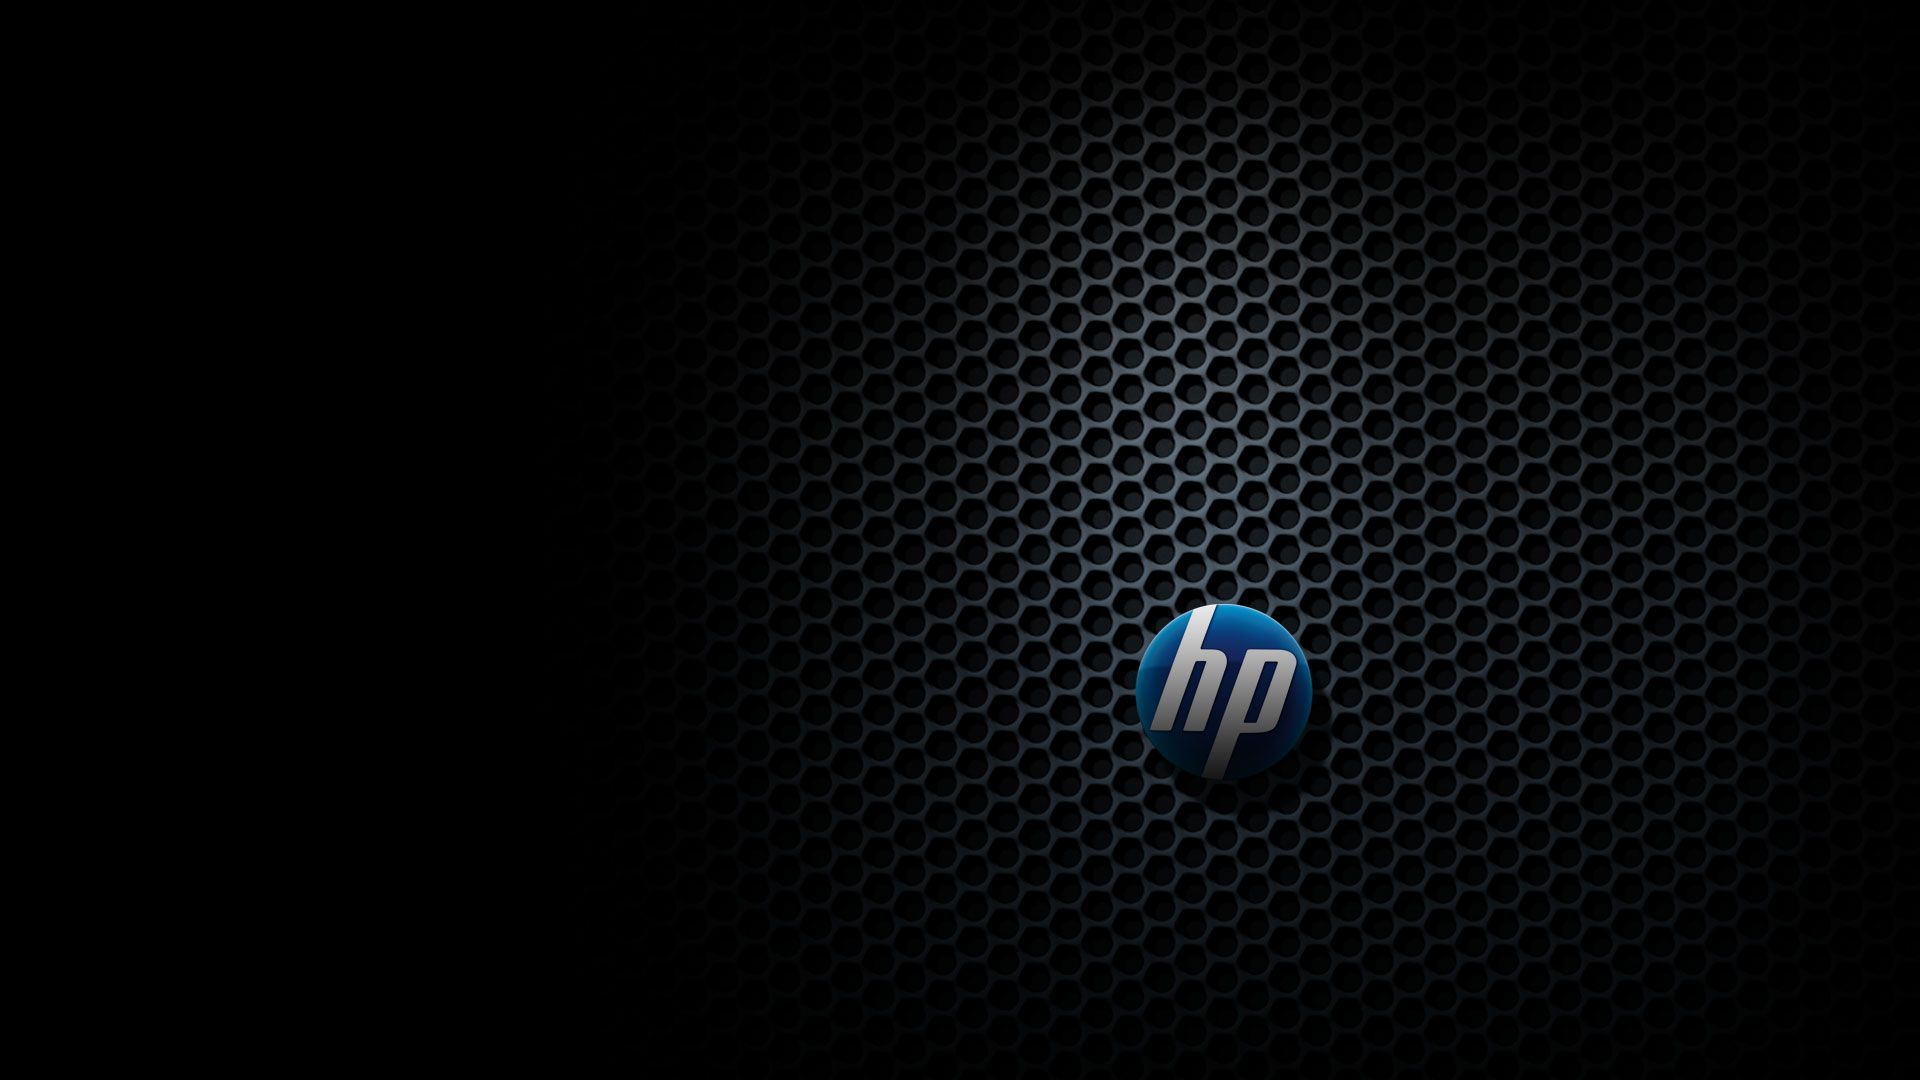 HP Desktop Wallpaper Free HP Desktop Background